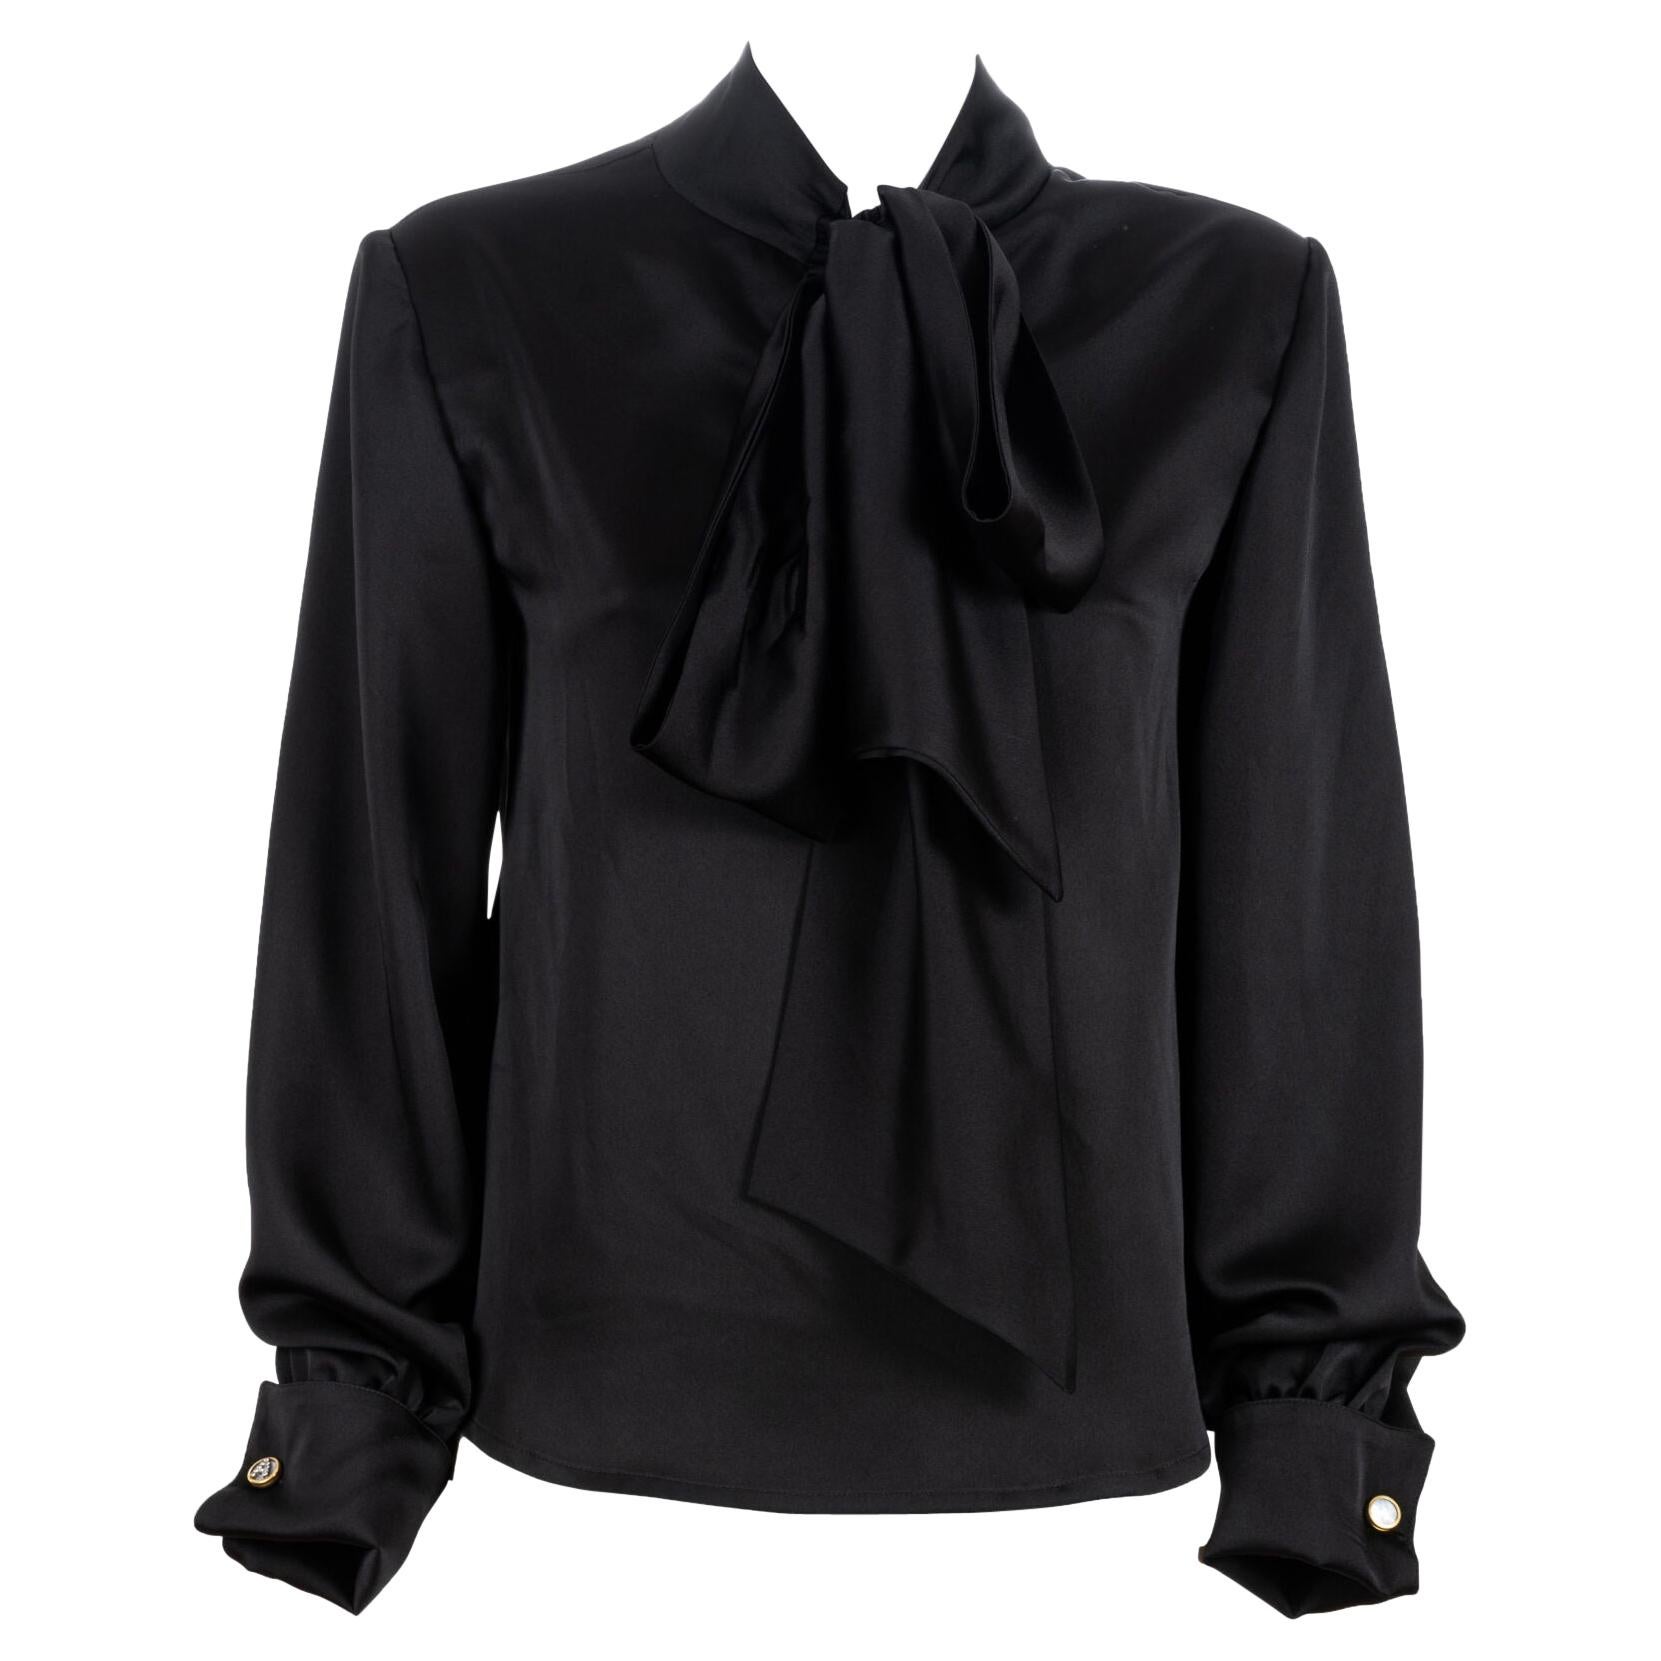 Black silk blouse NWOT